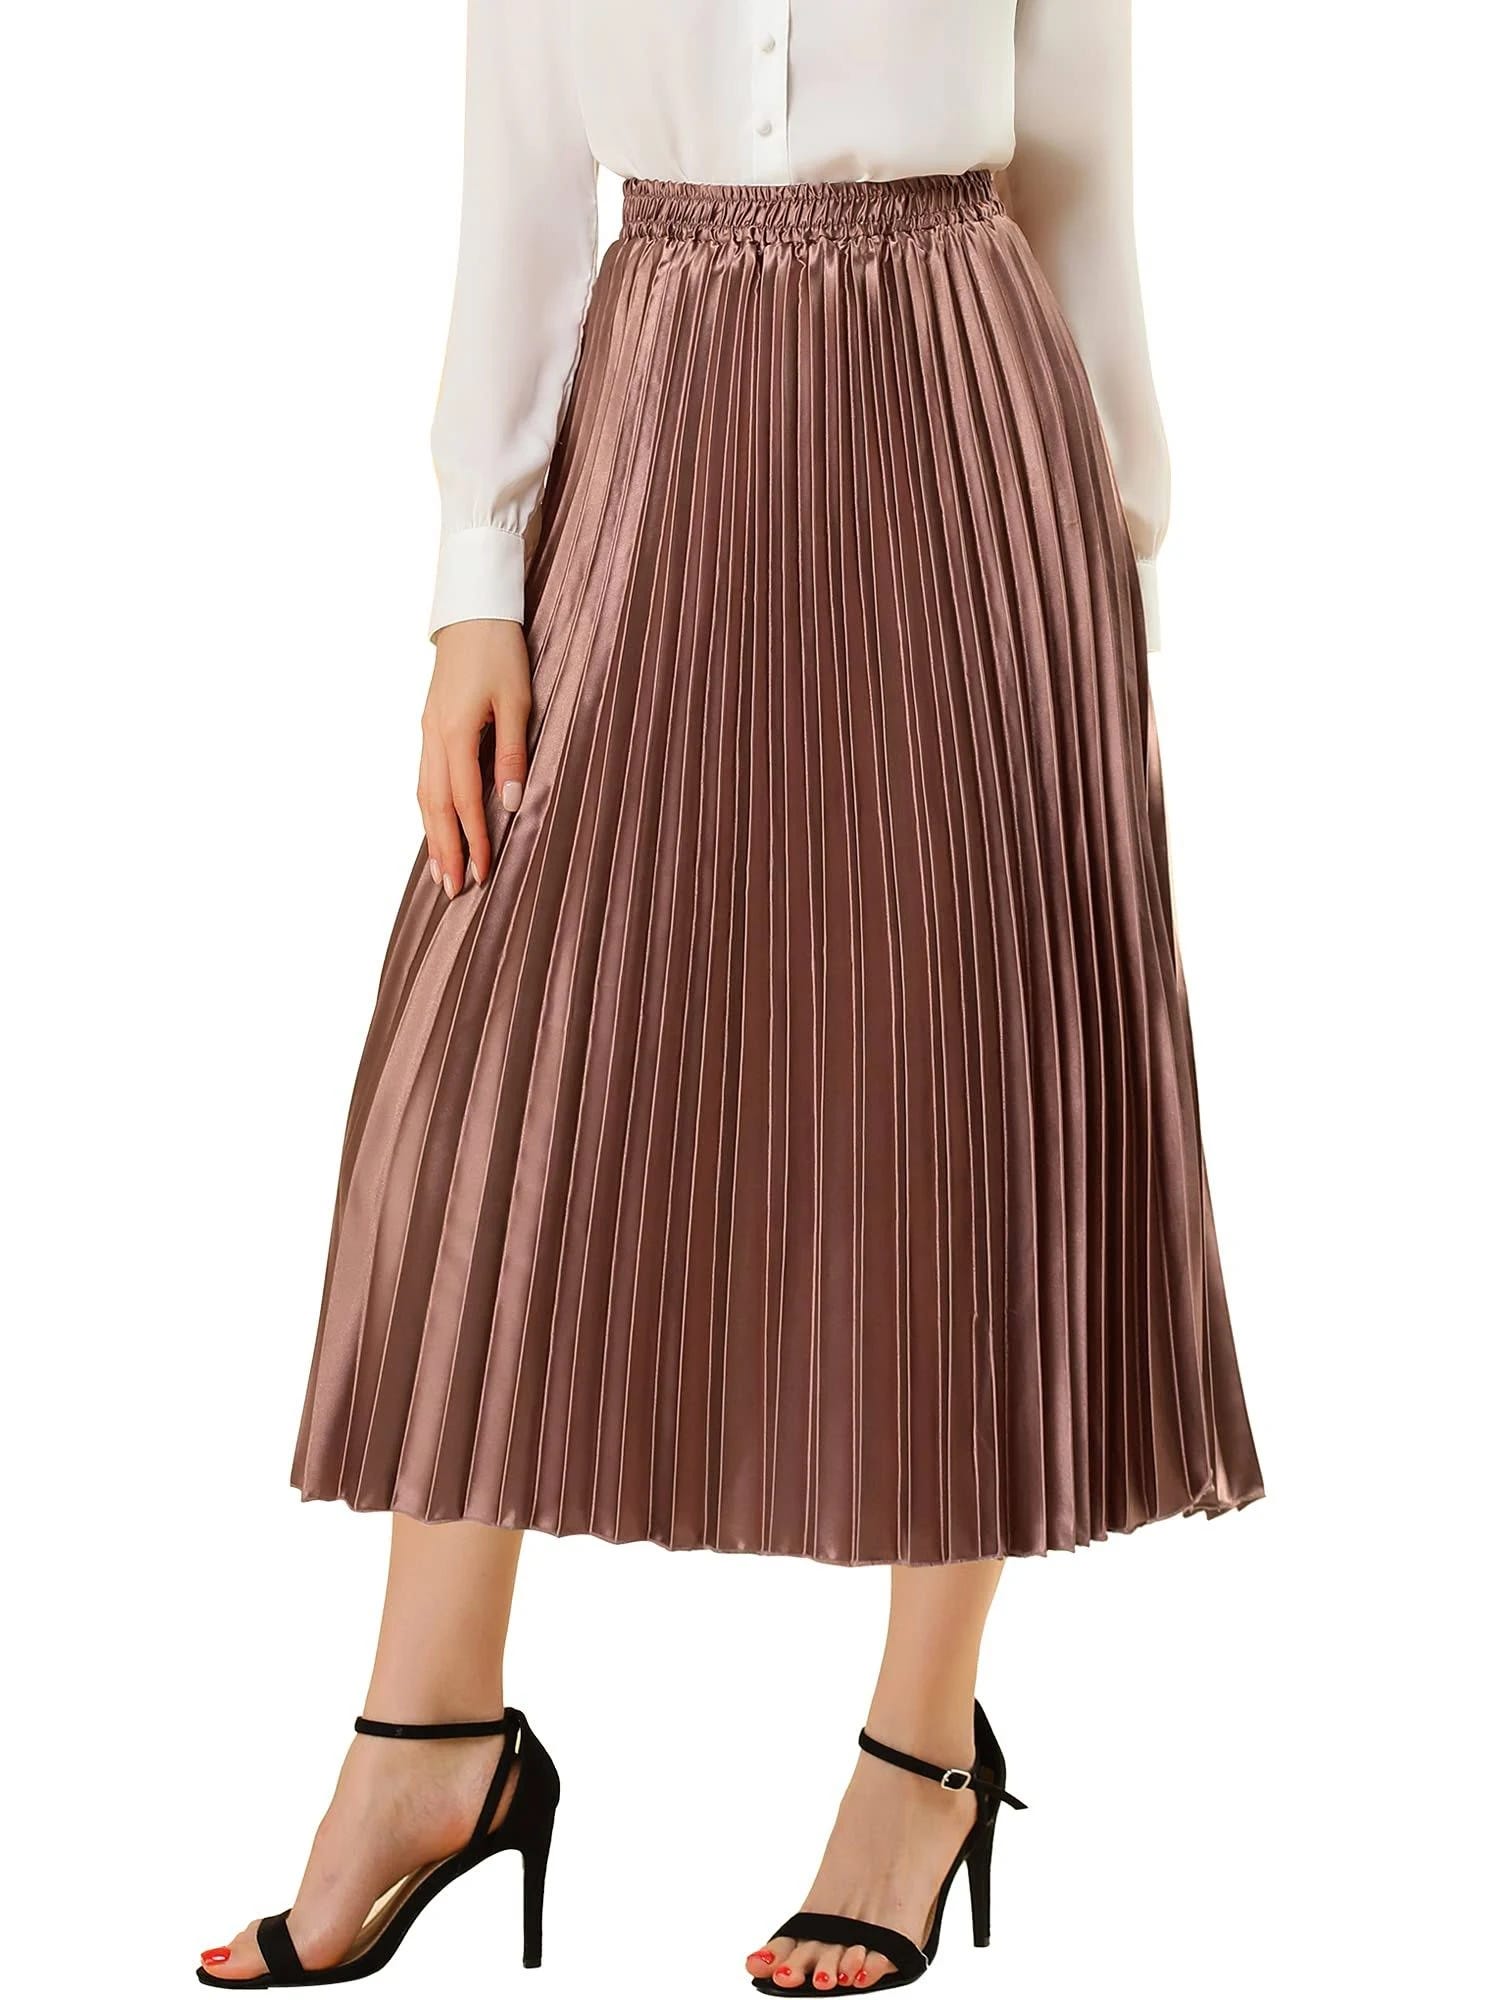 Gorgeous Accordion-Pleated Midi Skirt Dress for Parties - High Waist, Metallic & Comfortable | Image